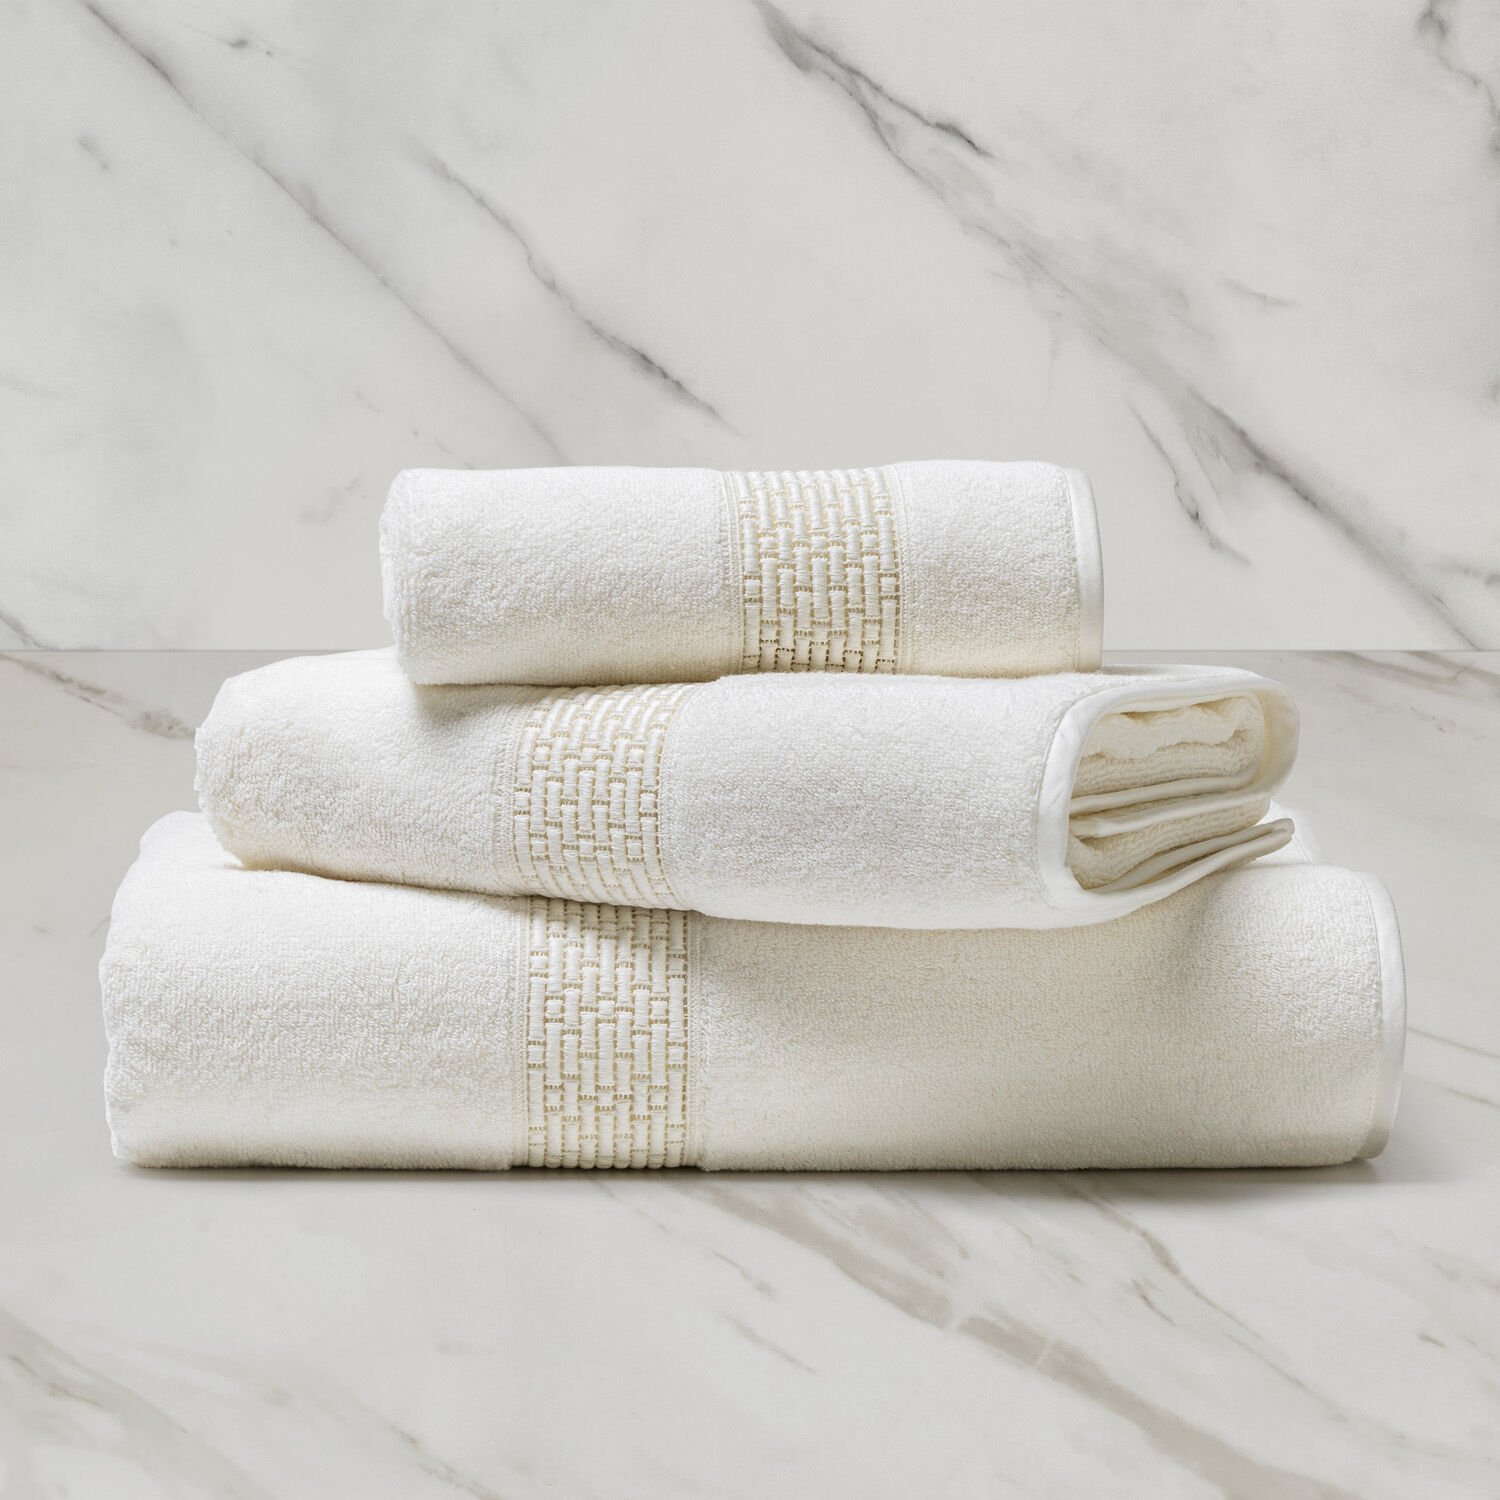 slide 1 Affinity Lace Bath Towel